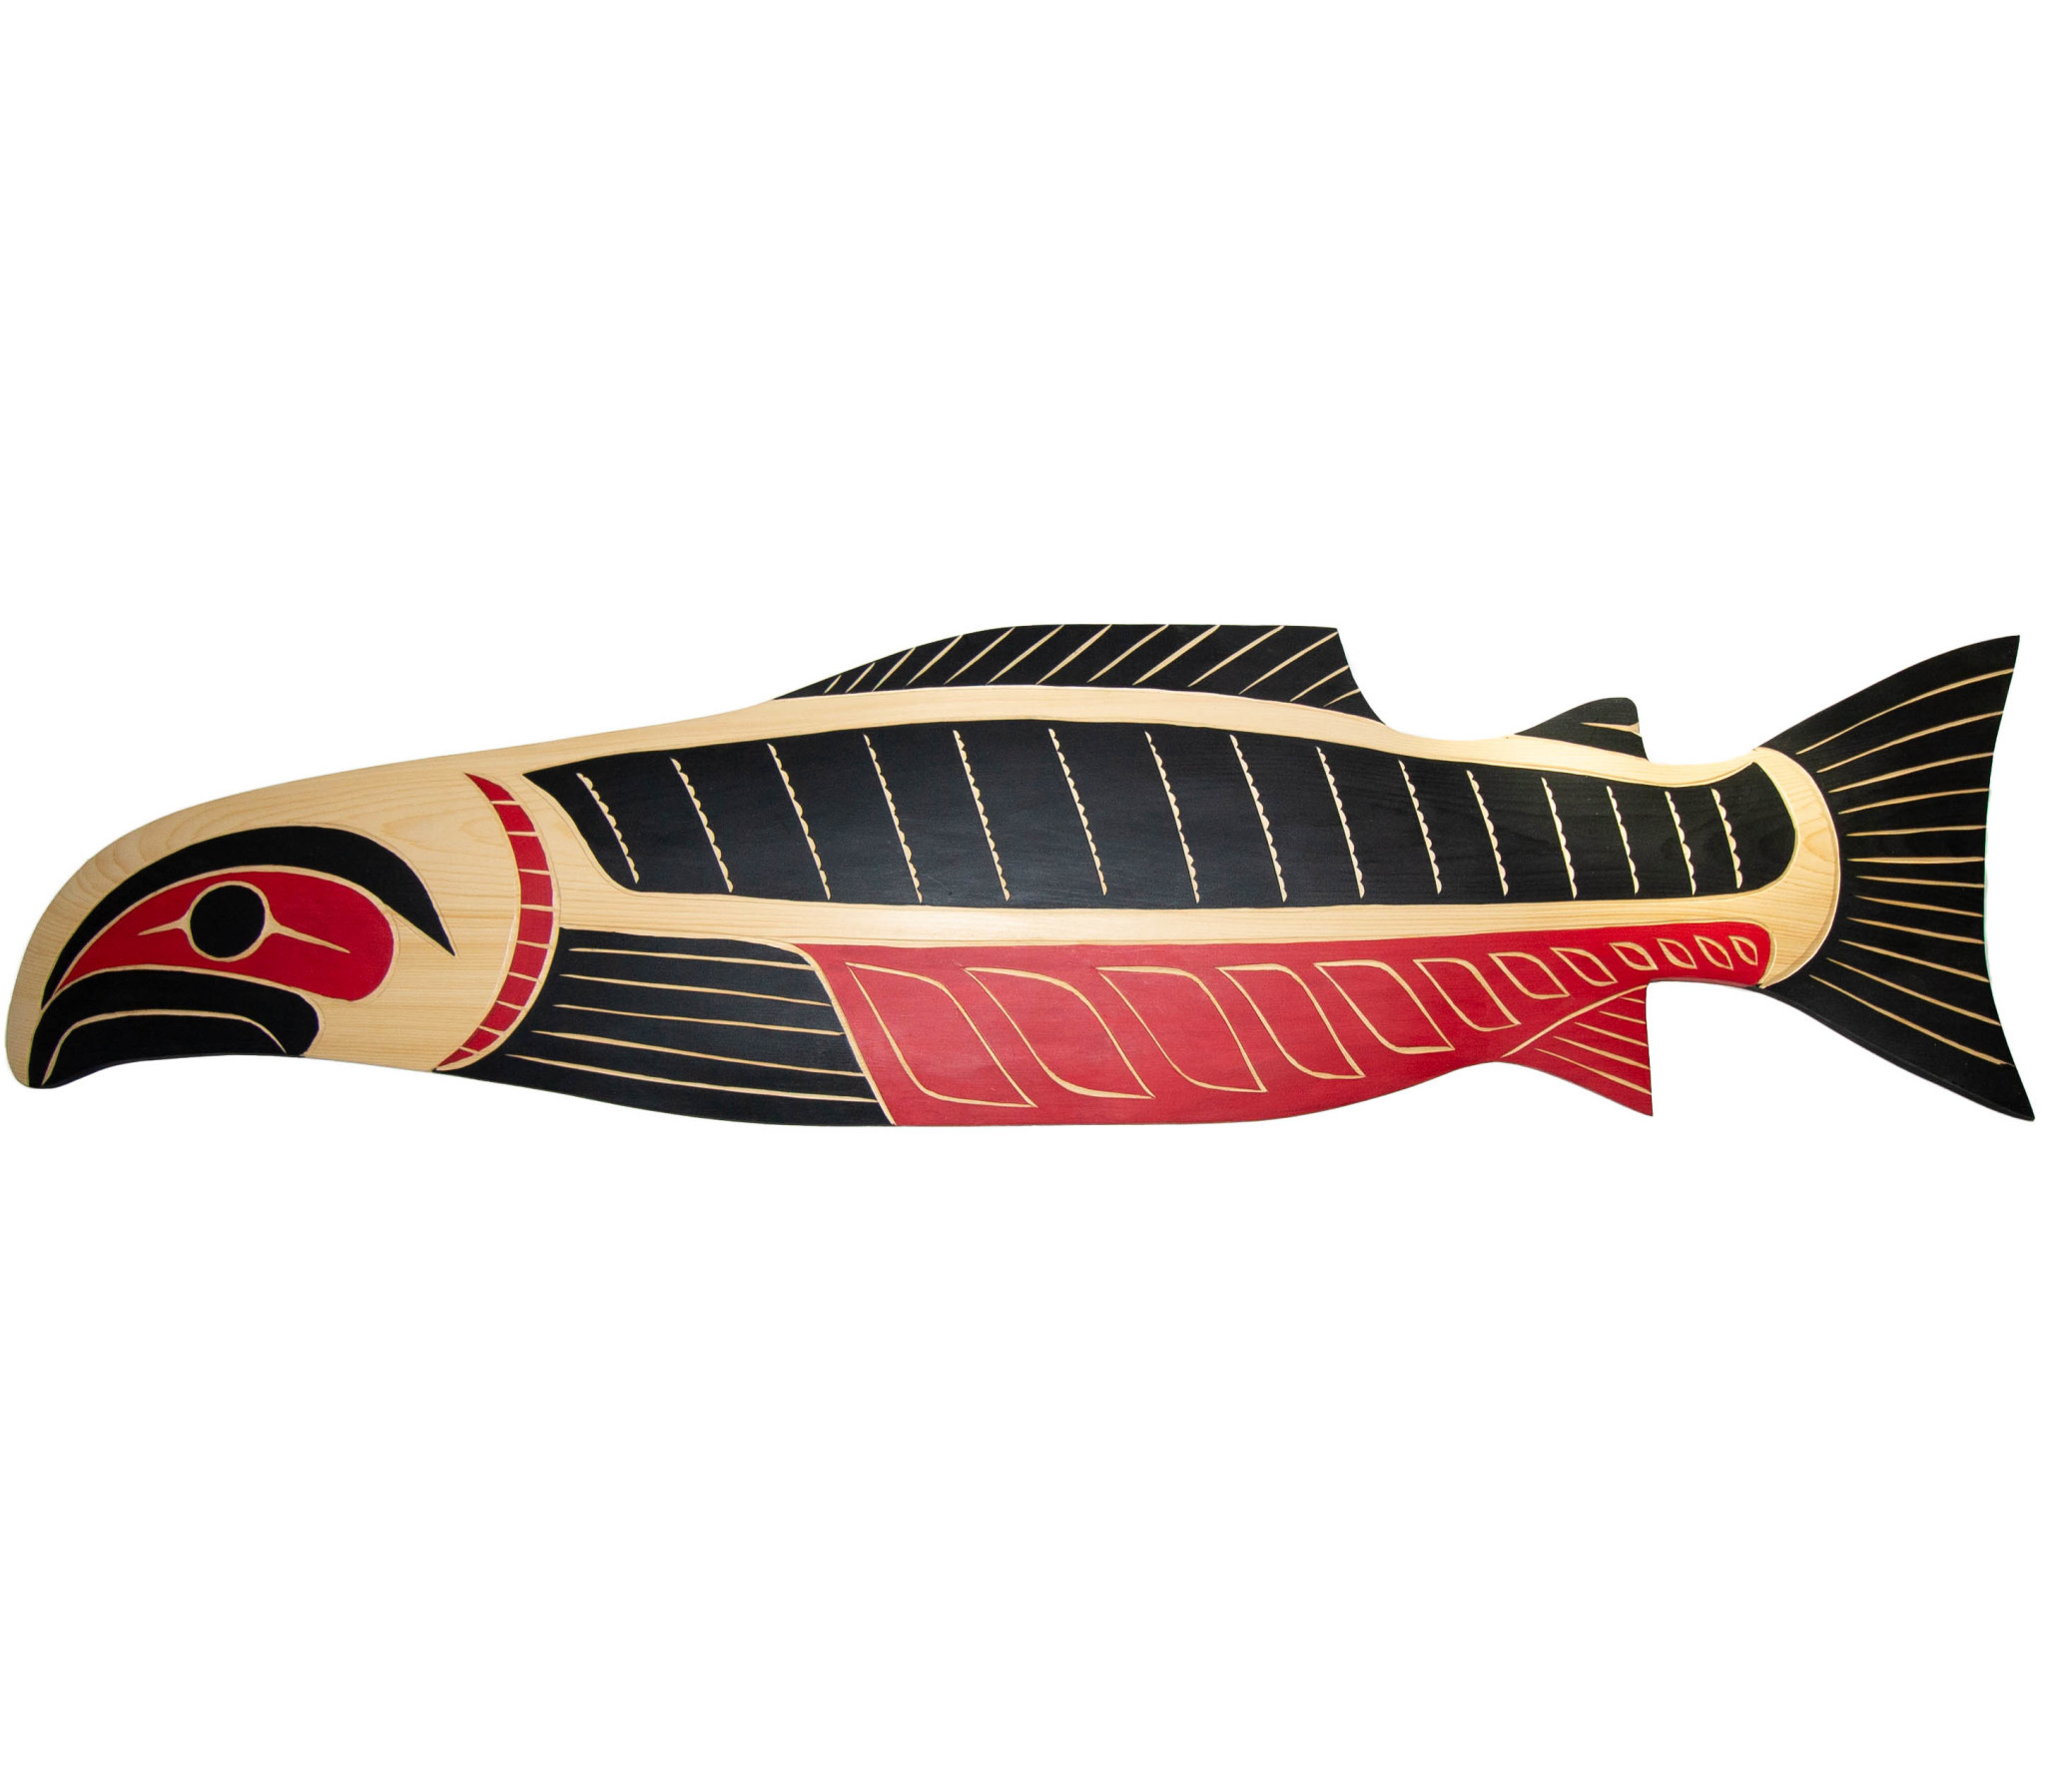 Pacific Northwest Indigenous Art Salmon Plaque